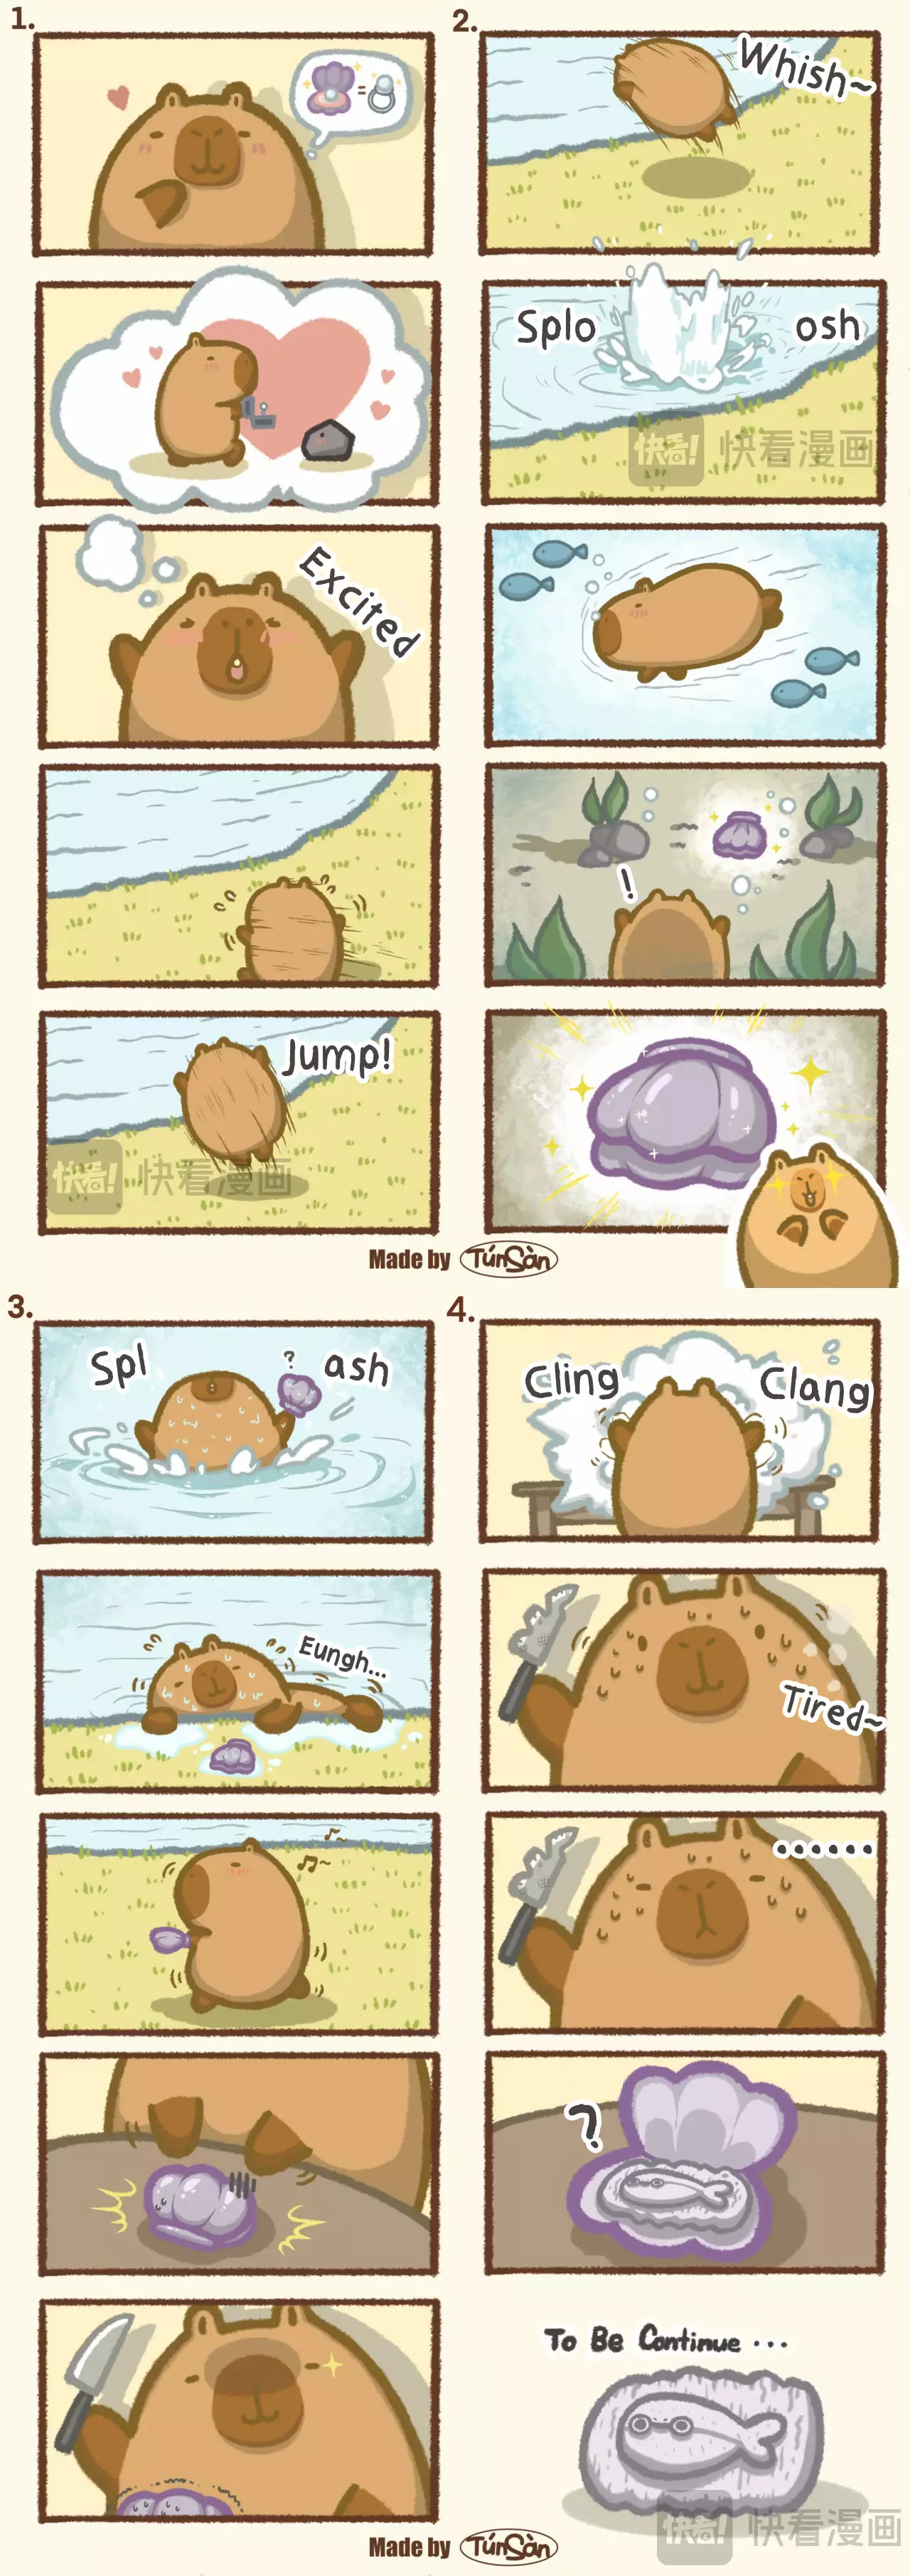 Capybara And His Friends - 3 page 1-3e6bb8f3